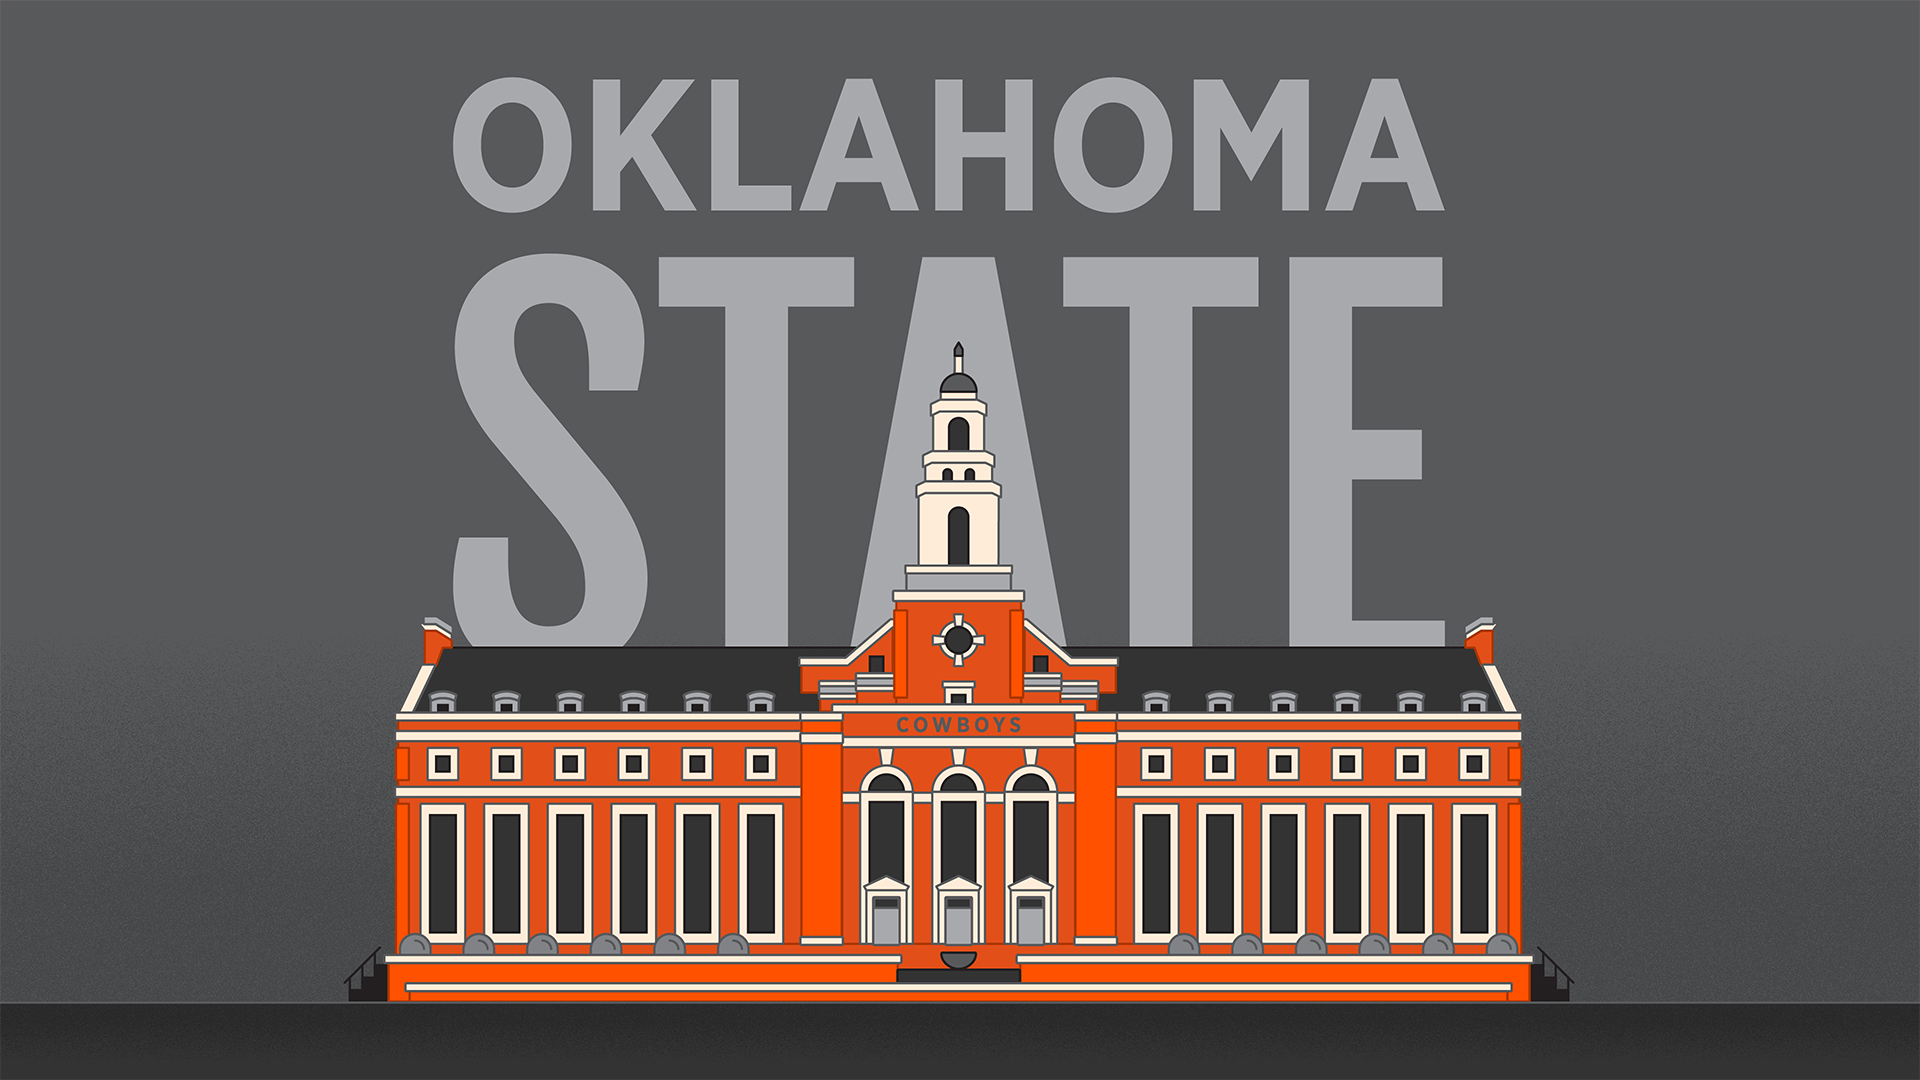 Mobile backgrounds  Oklahoma State University